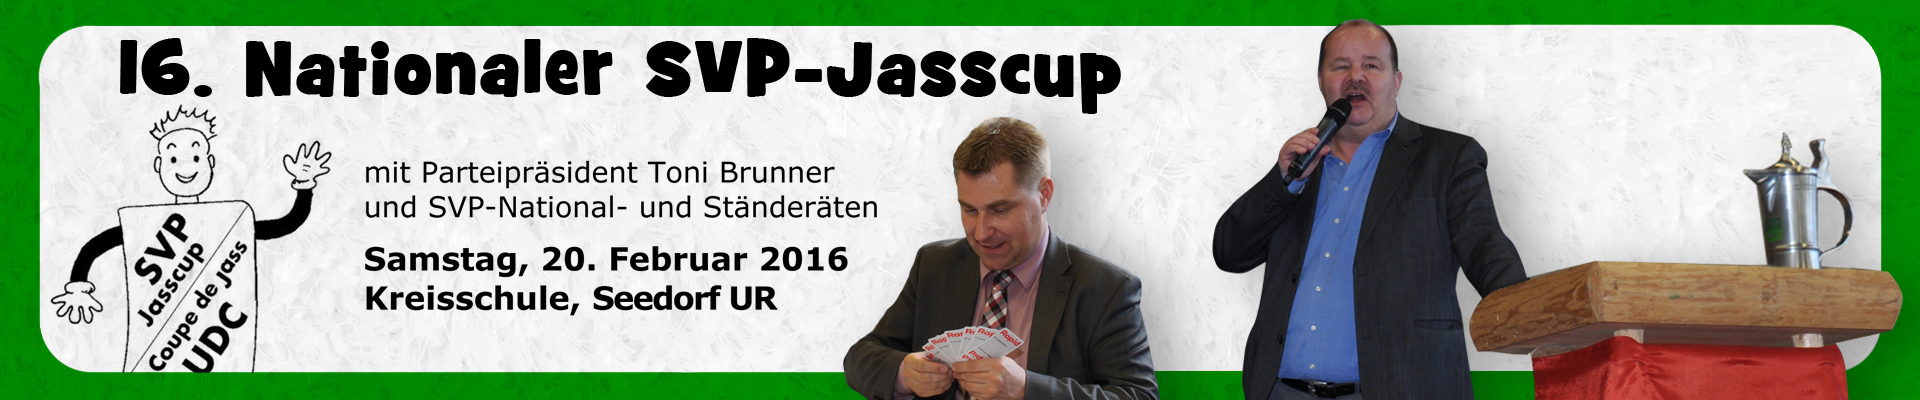 2016-Jasscup-SVP-Schweiz